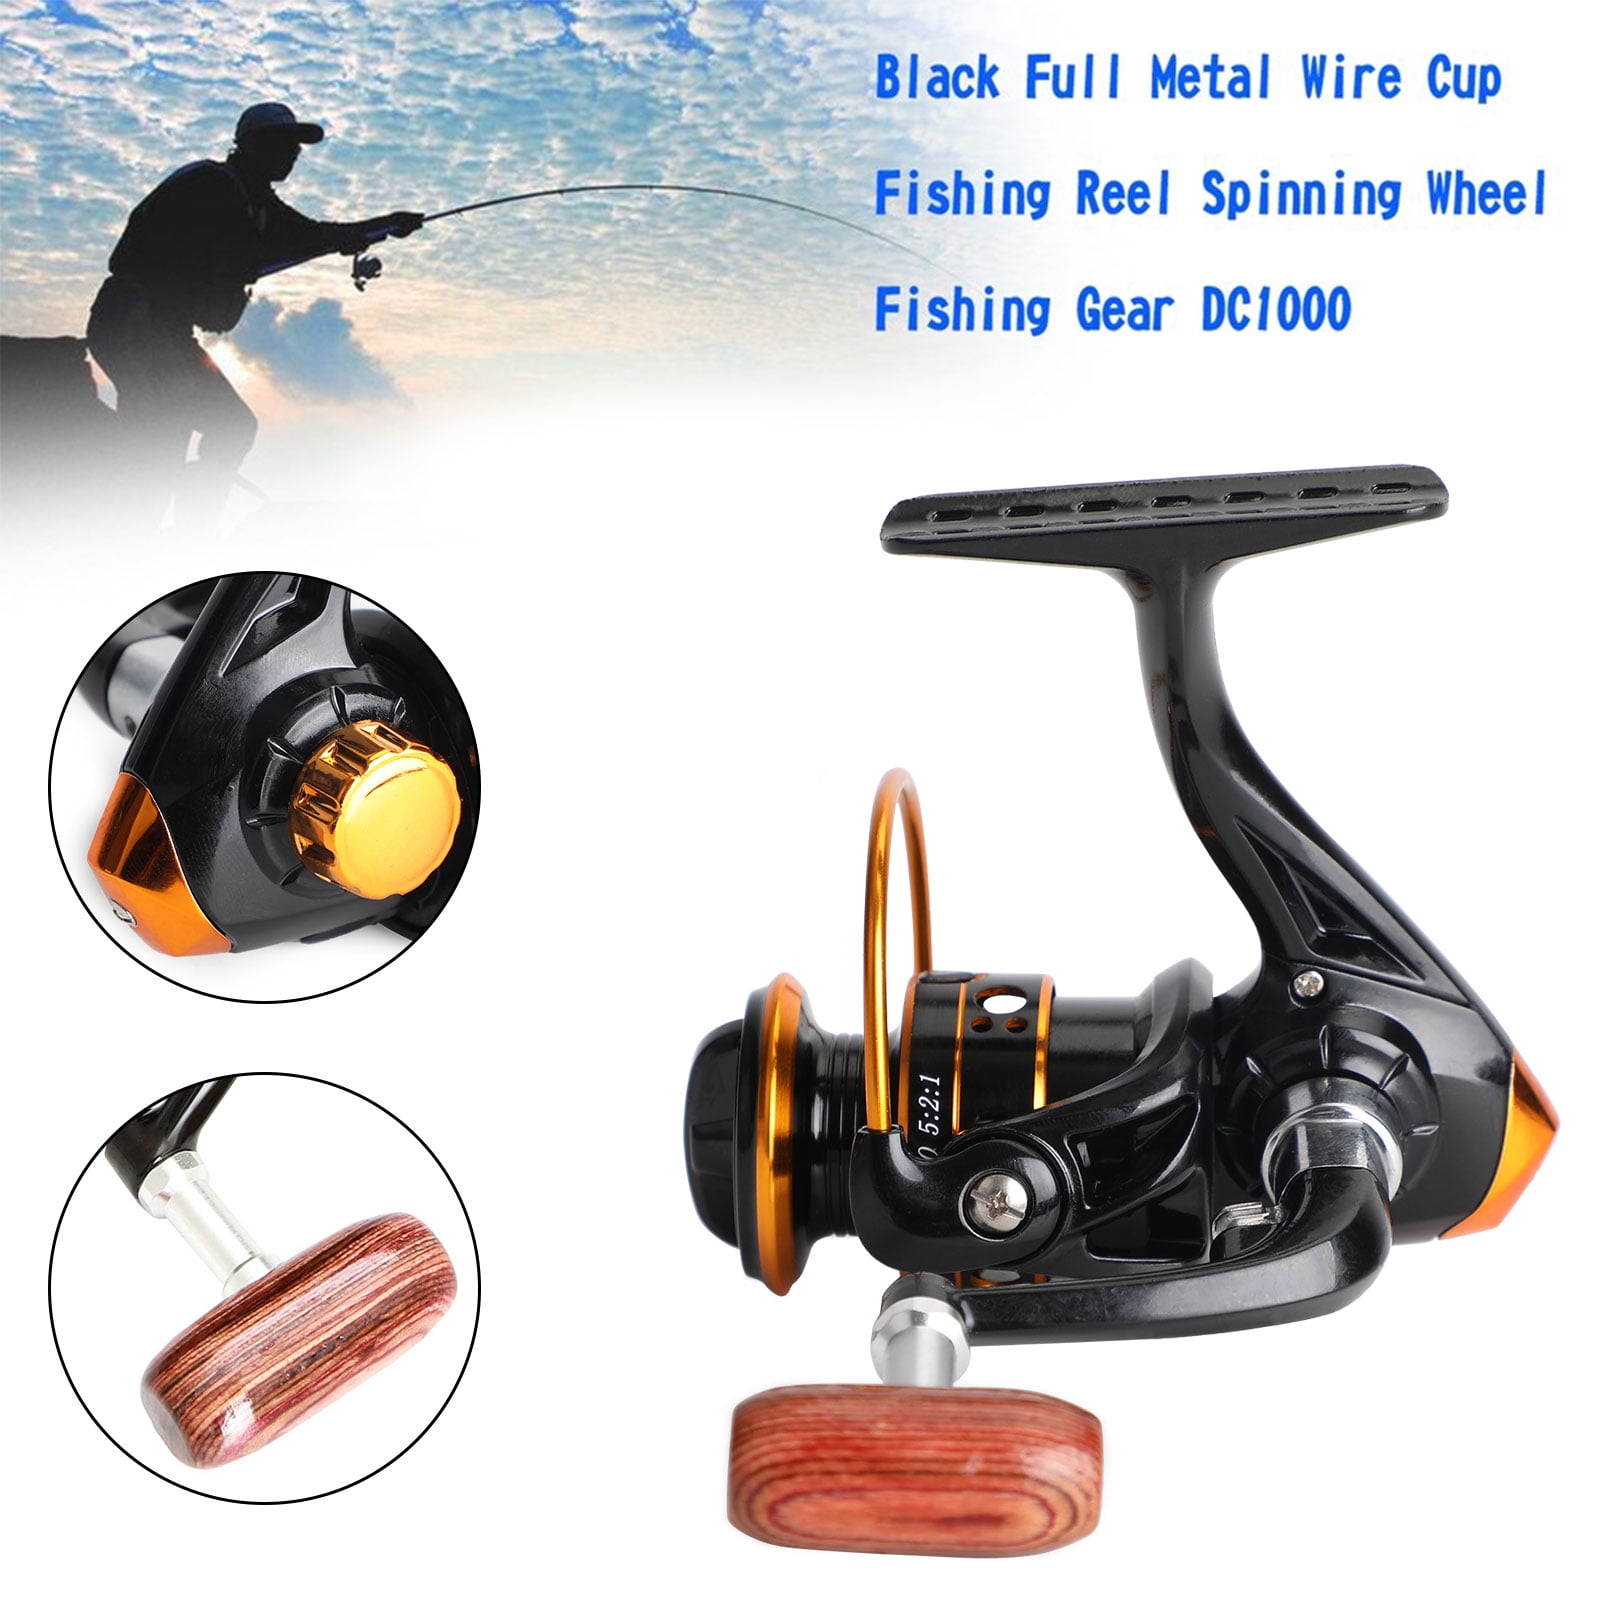 Black Full Metal Wire Cup Fishing Reel Spinning Wheel Fishing Gear DC5000 